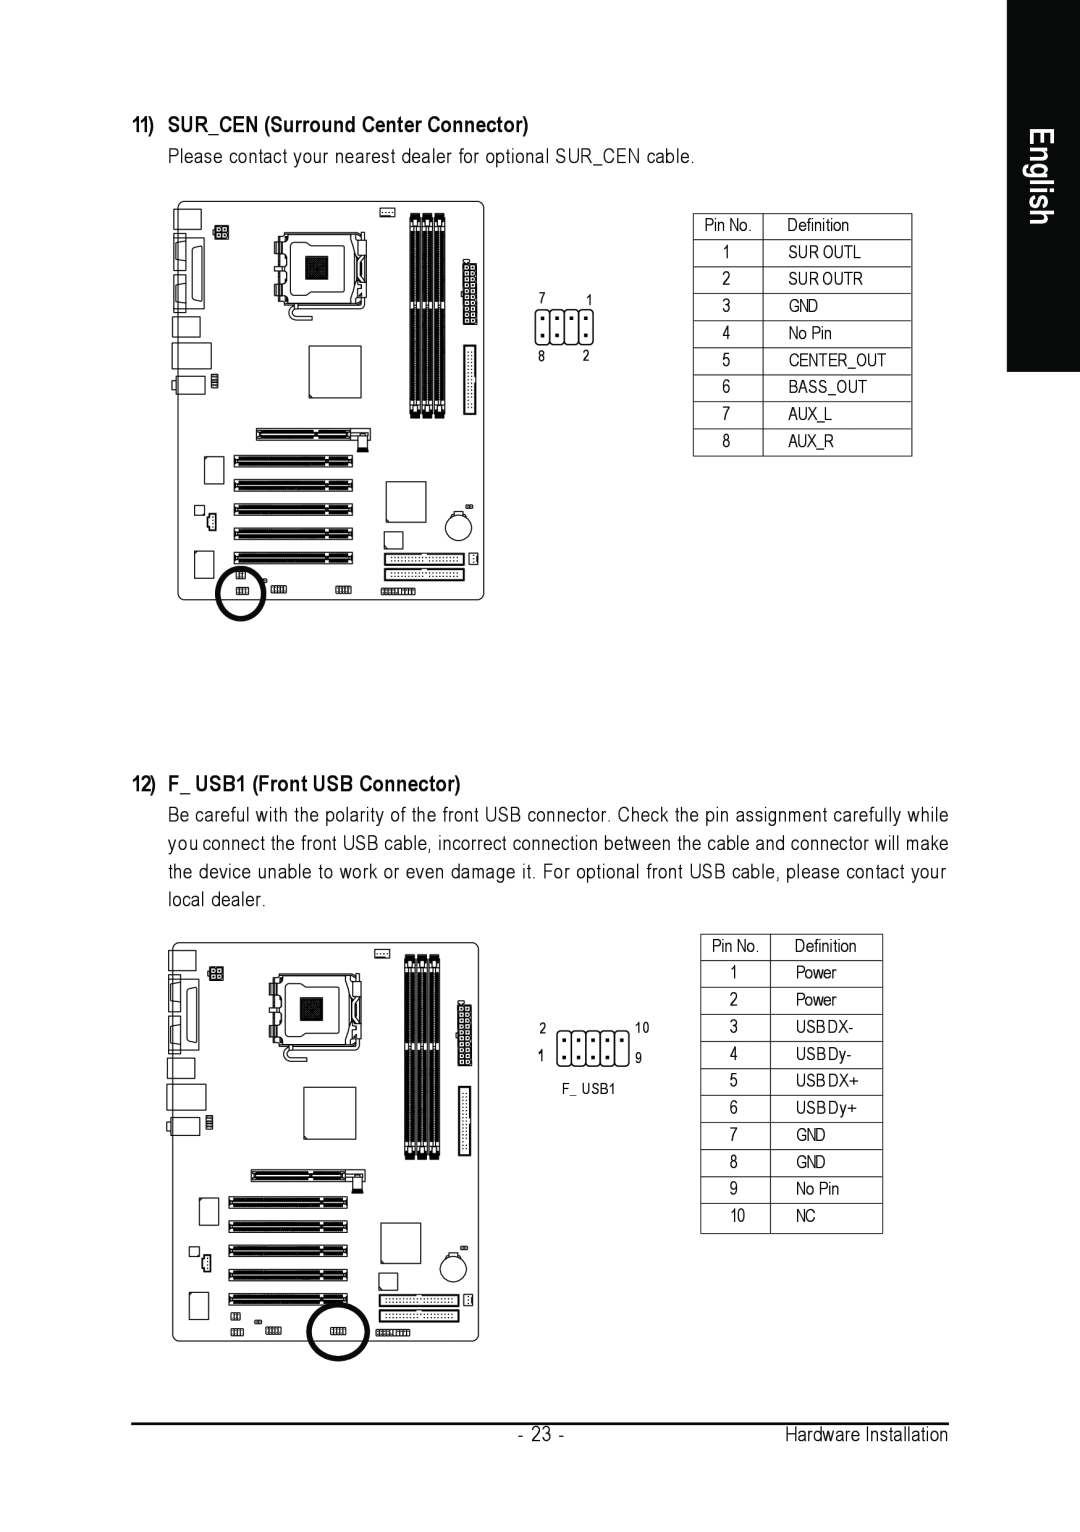 Gigabyte GA-8I845GE775-G user manual SURCEN Surround Center Connector, F USB1 Front USB Connector, English 